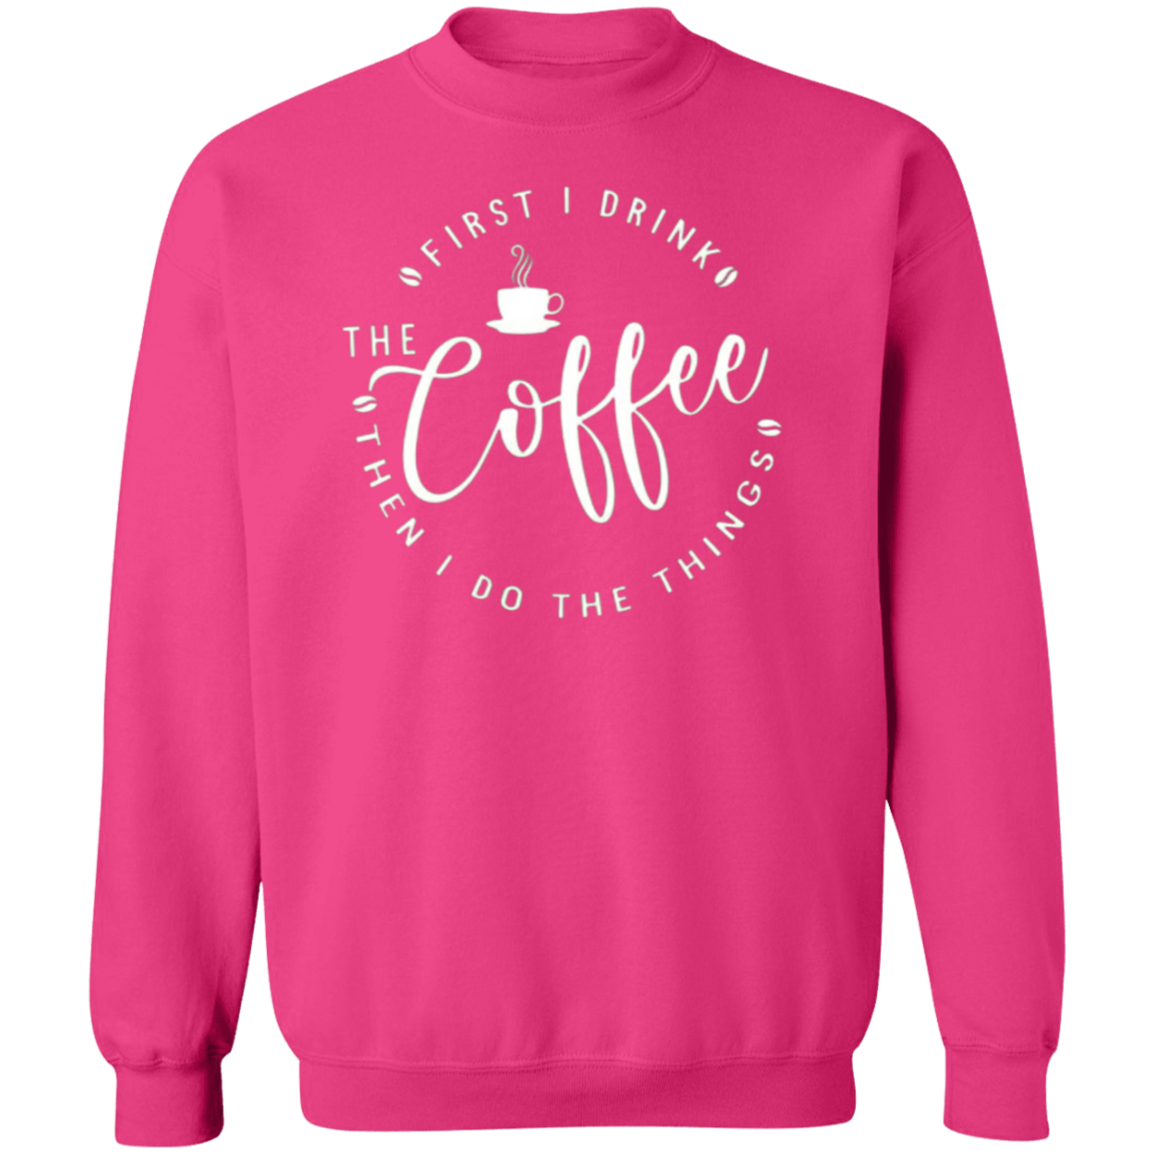 Coffee First Sweatshirt